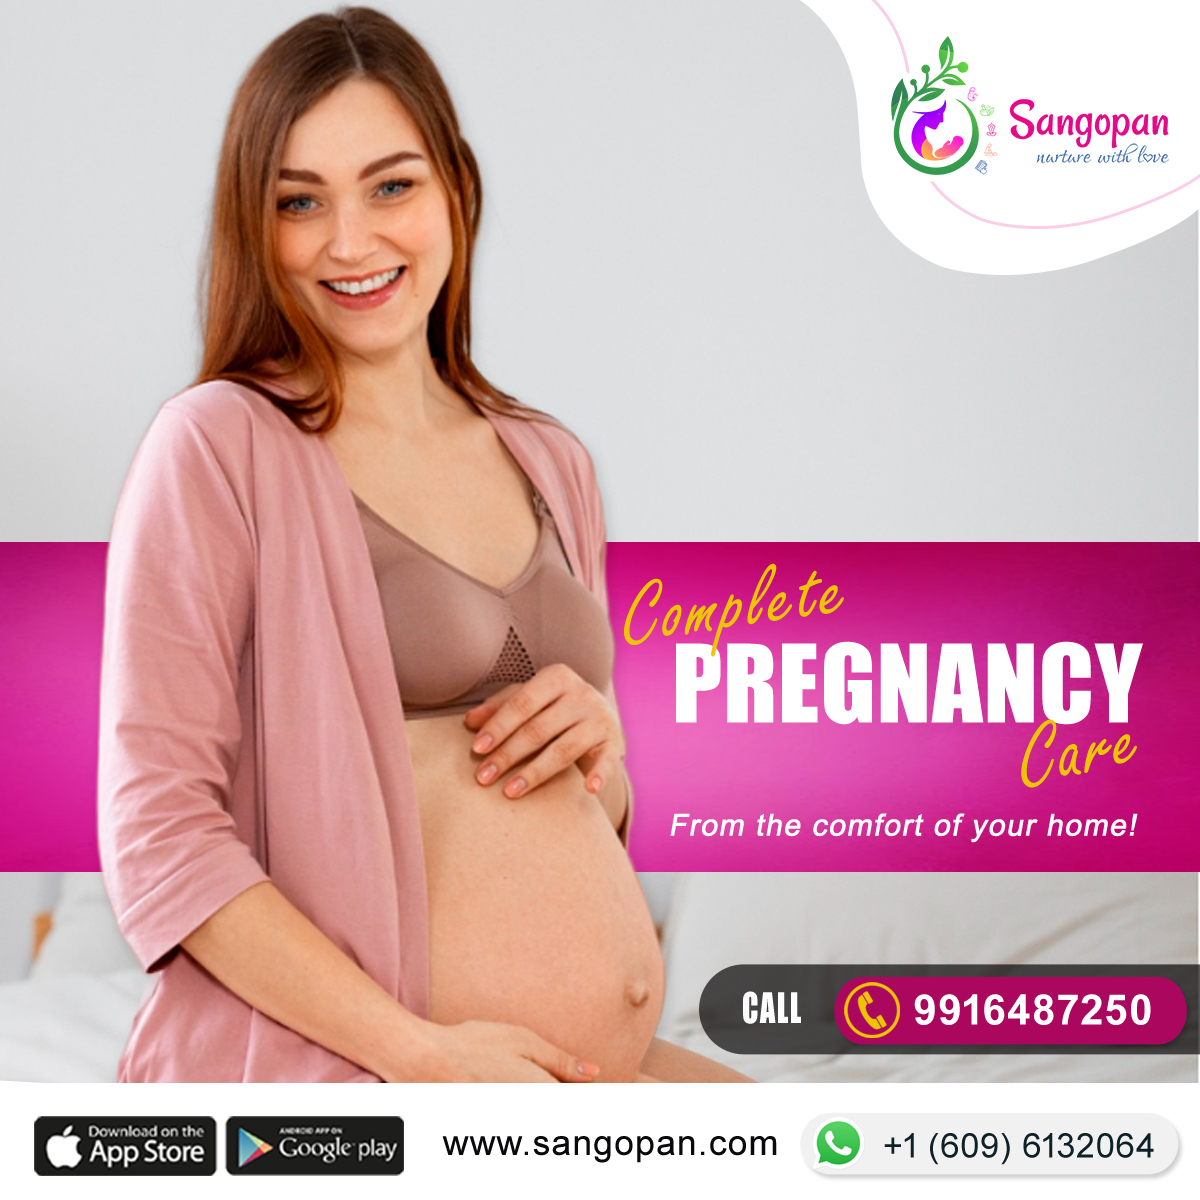 We provide complete Pregnancy care from the comfort of your home! sangopan.com #sangopan #pregnancytips #pregnancycare #babycare #bangalore #hyderabad #garbhsanskar #massage #Babymassage #pregnancyhealth #yoga #pranayama #pregnancy #pregnancyjourney #pregnancymassage